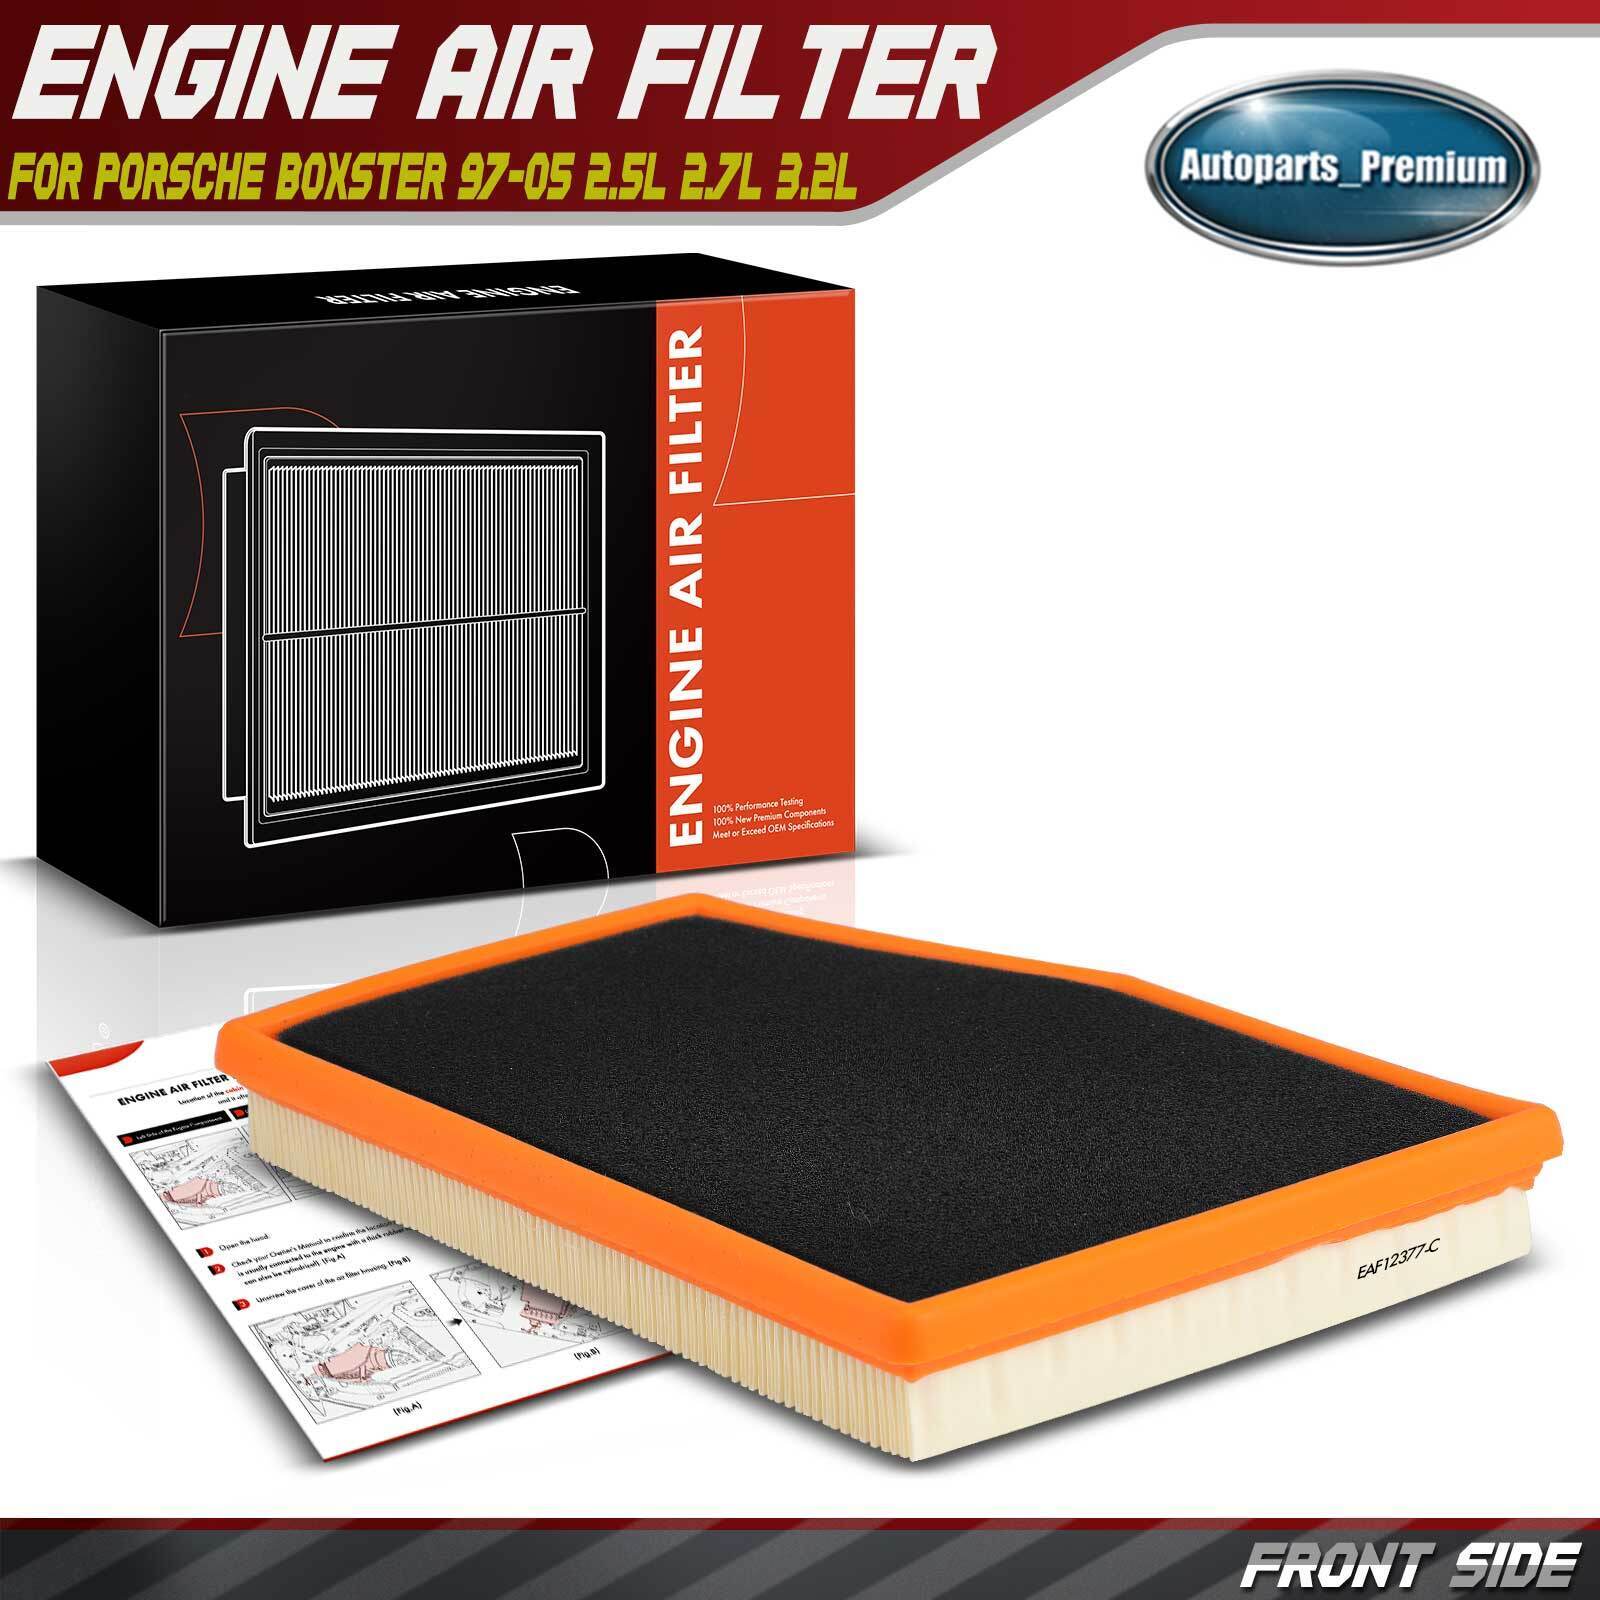 Engine Air Filter for Porsche Boxster 1997-2005 H6 2.5L H6 2.7L 3.2L 99611013104